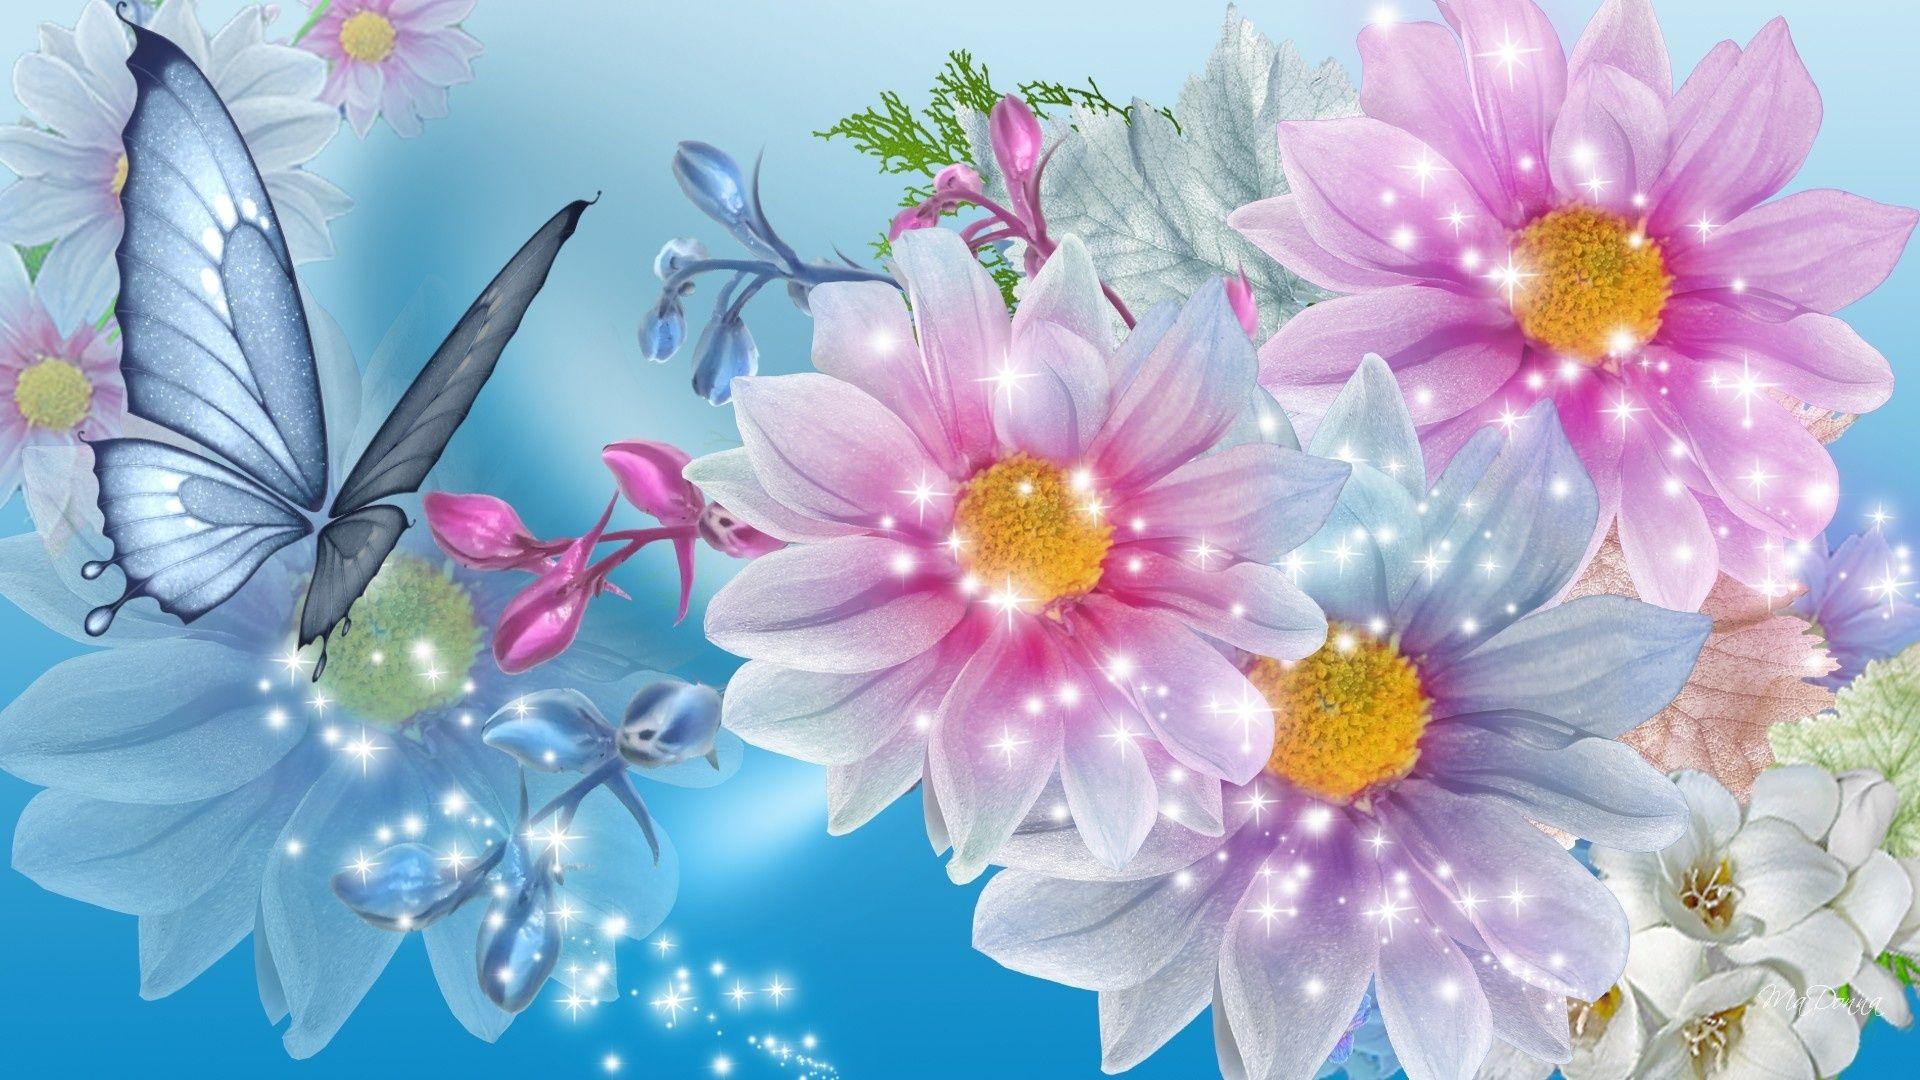 Beautiful Flower Wallpaper For Girls Desktop Wallpaper. Rose flower wallpaper, Flower wallpaper, HD flower wallpaper